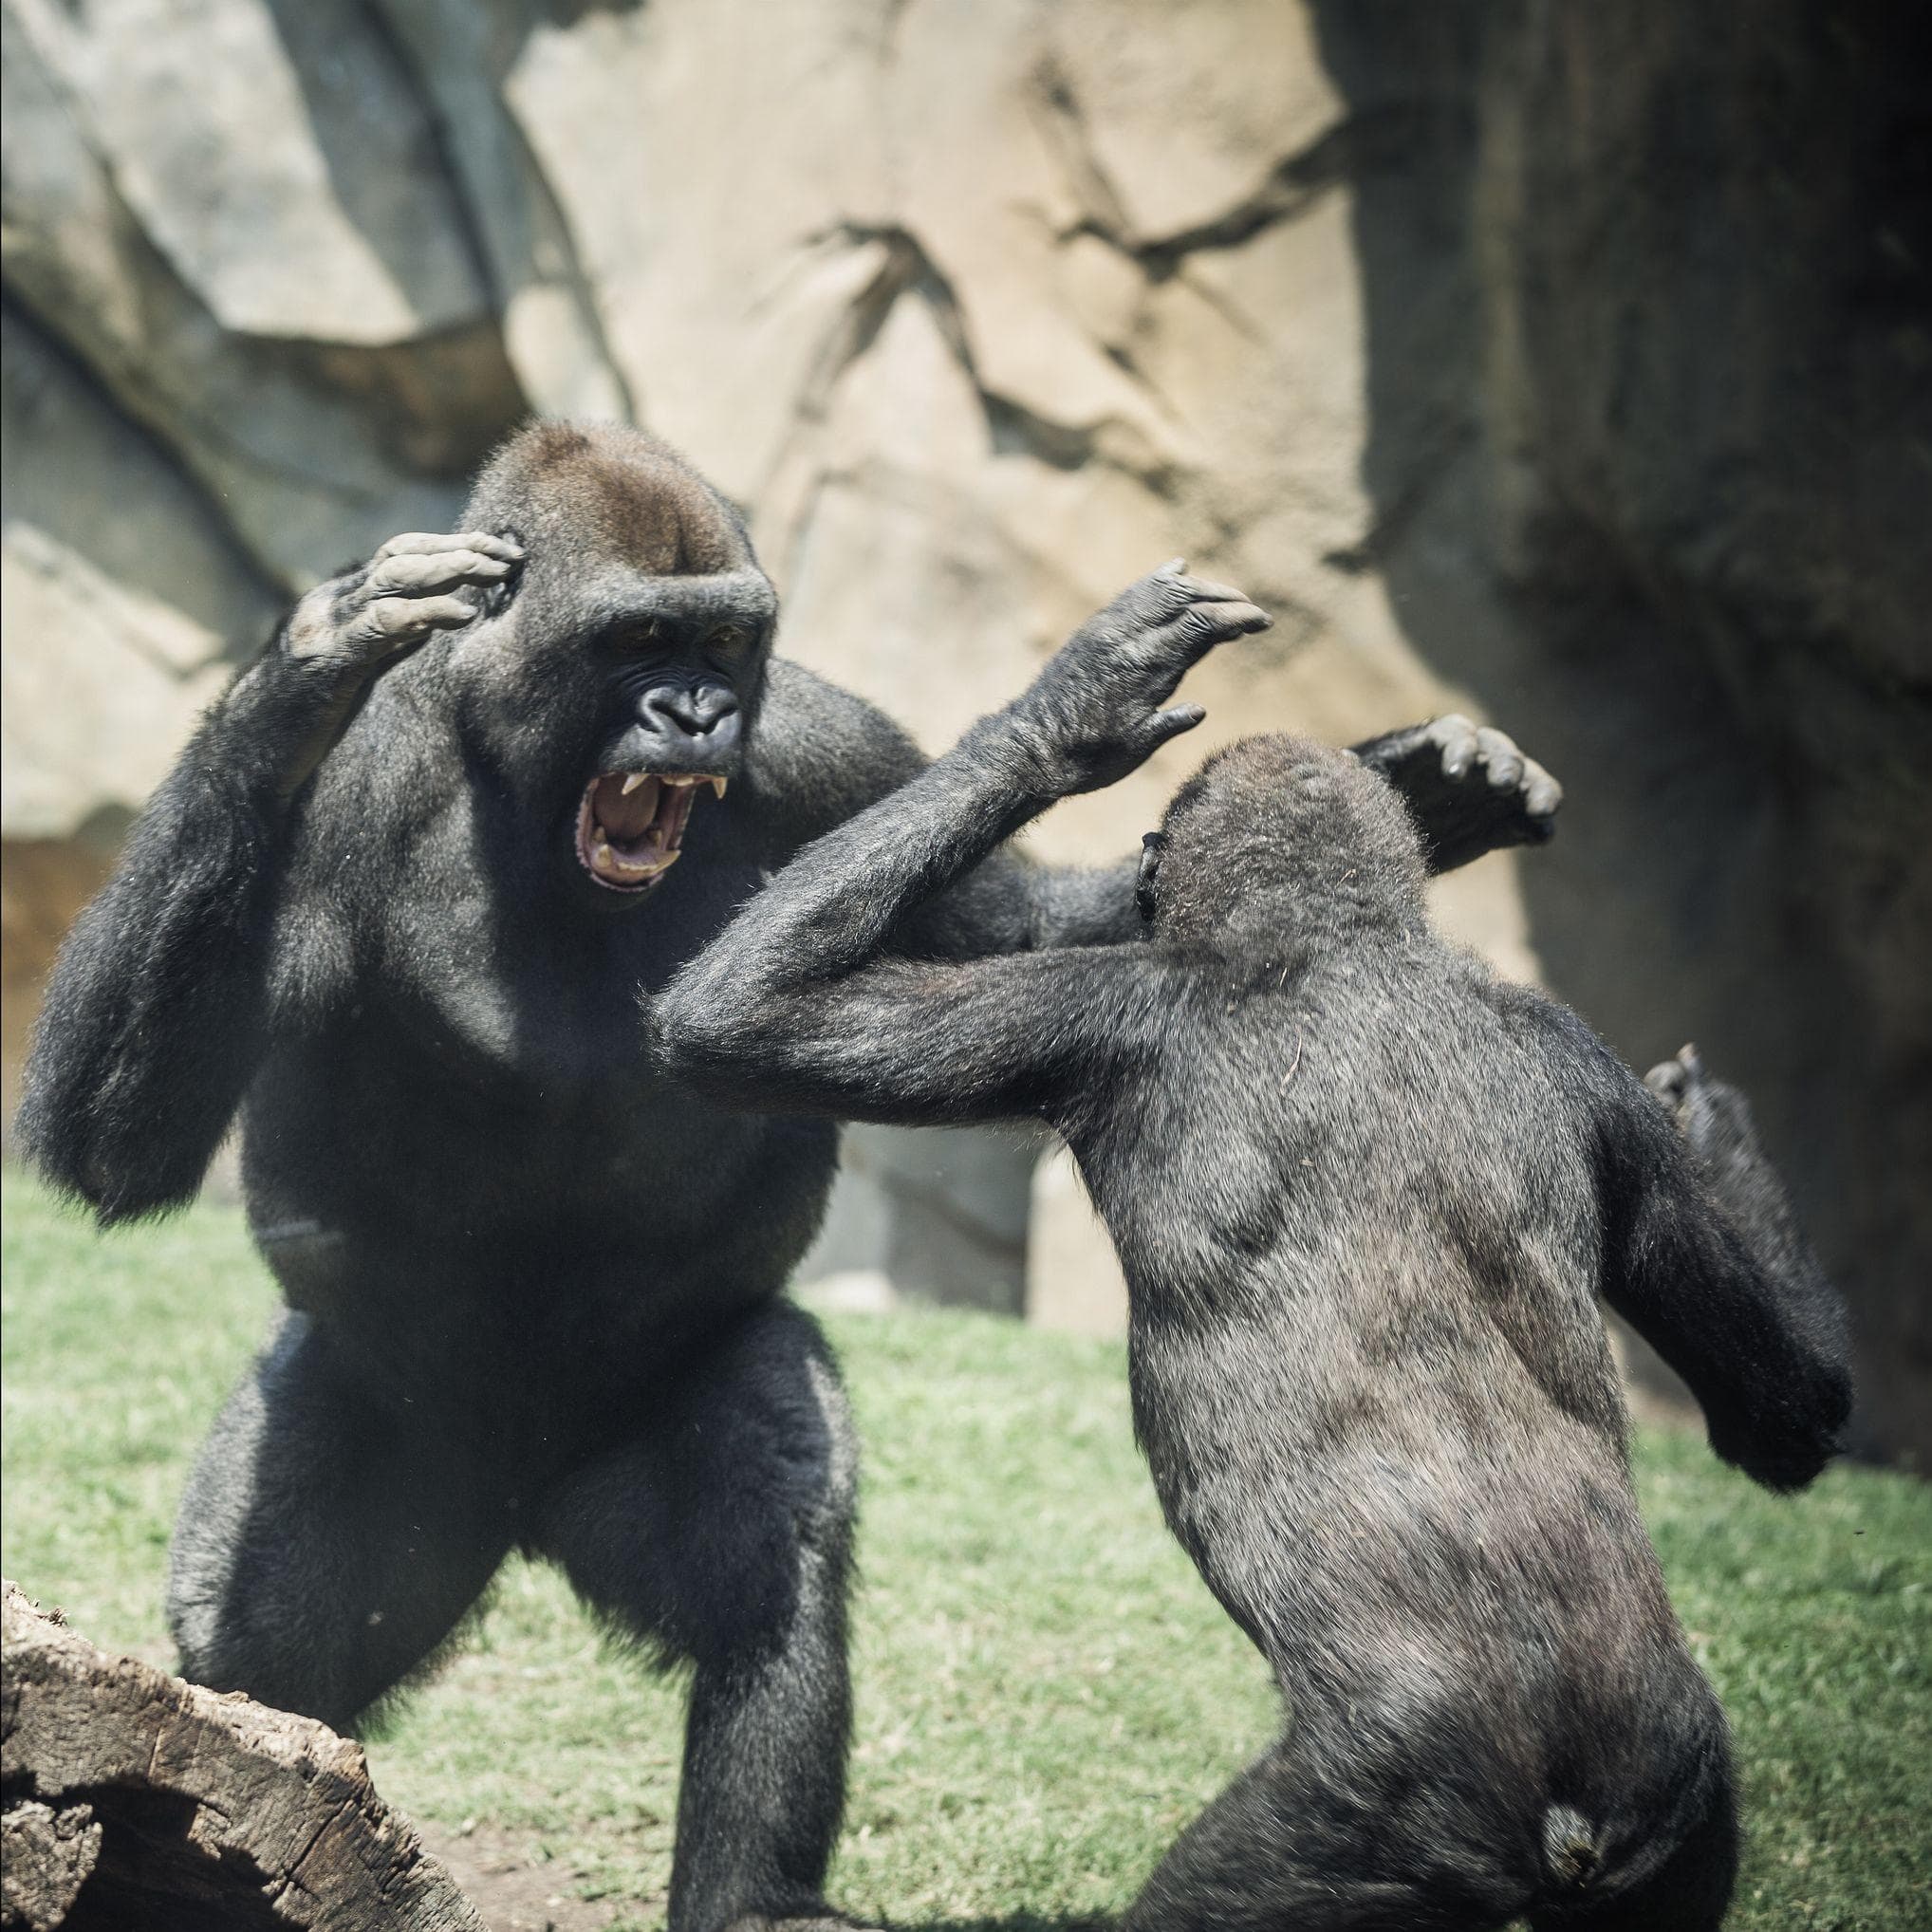 chimpanzee strength vs human